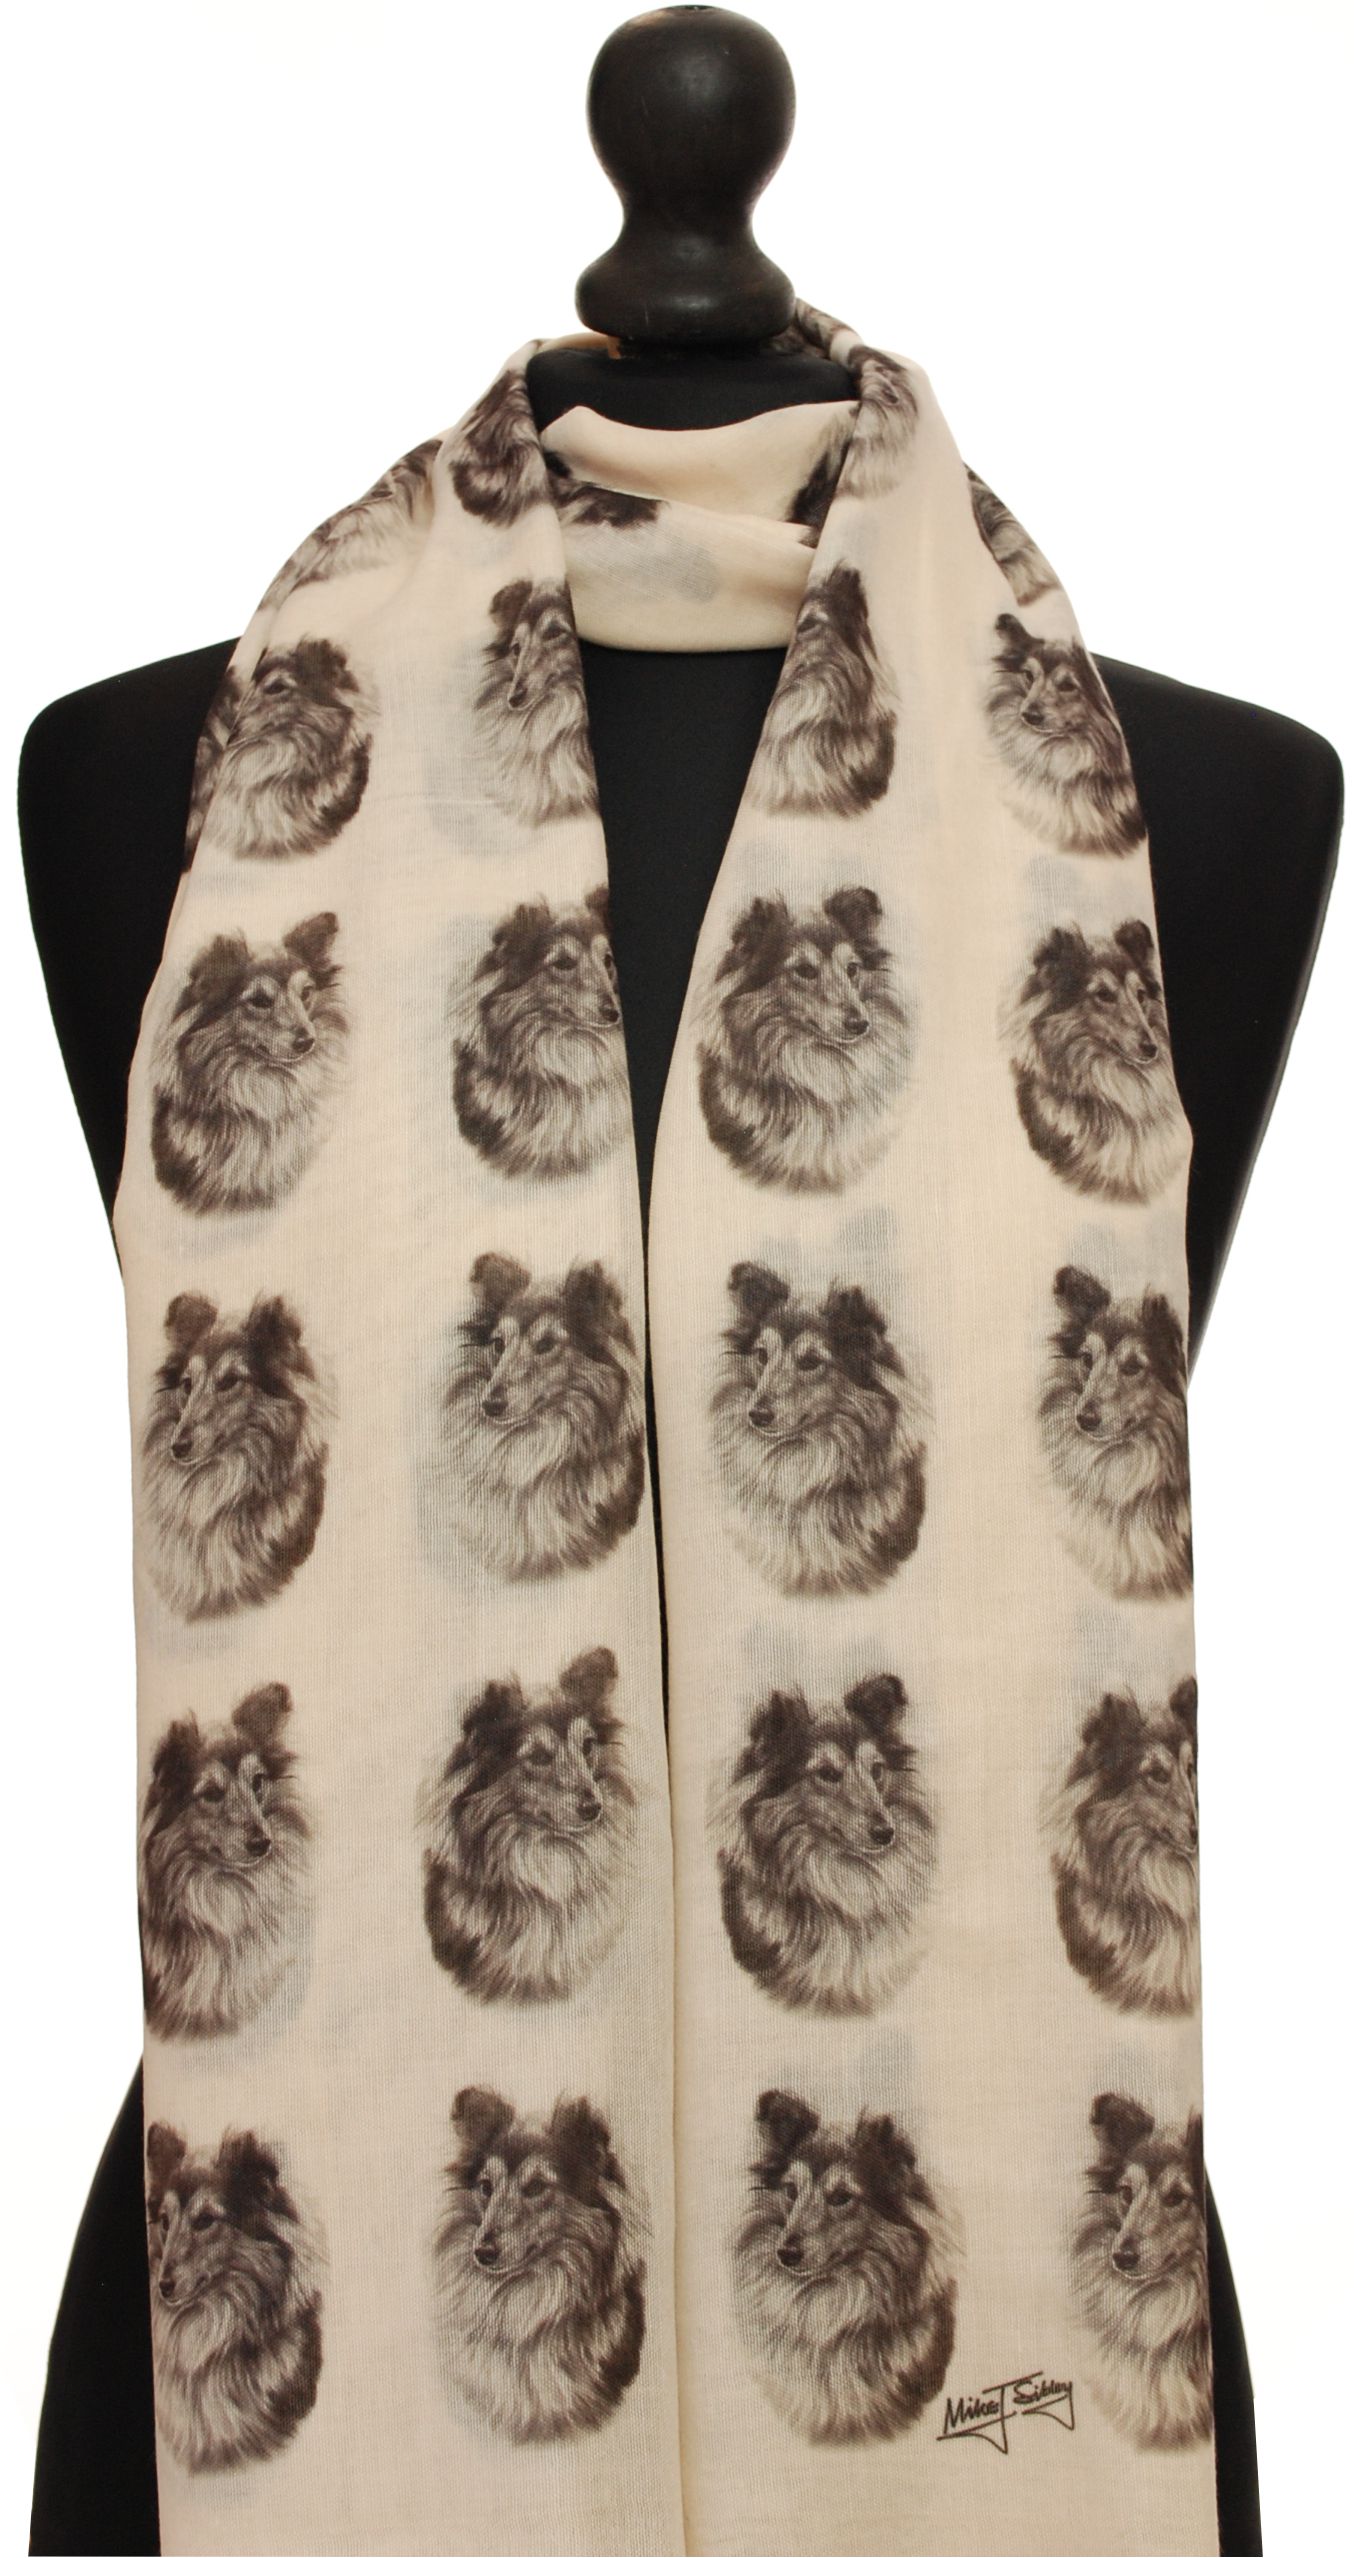 Mike Sibley Shetland Sheepdog licensed design ladies fashion scarf